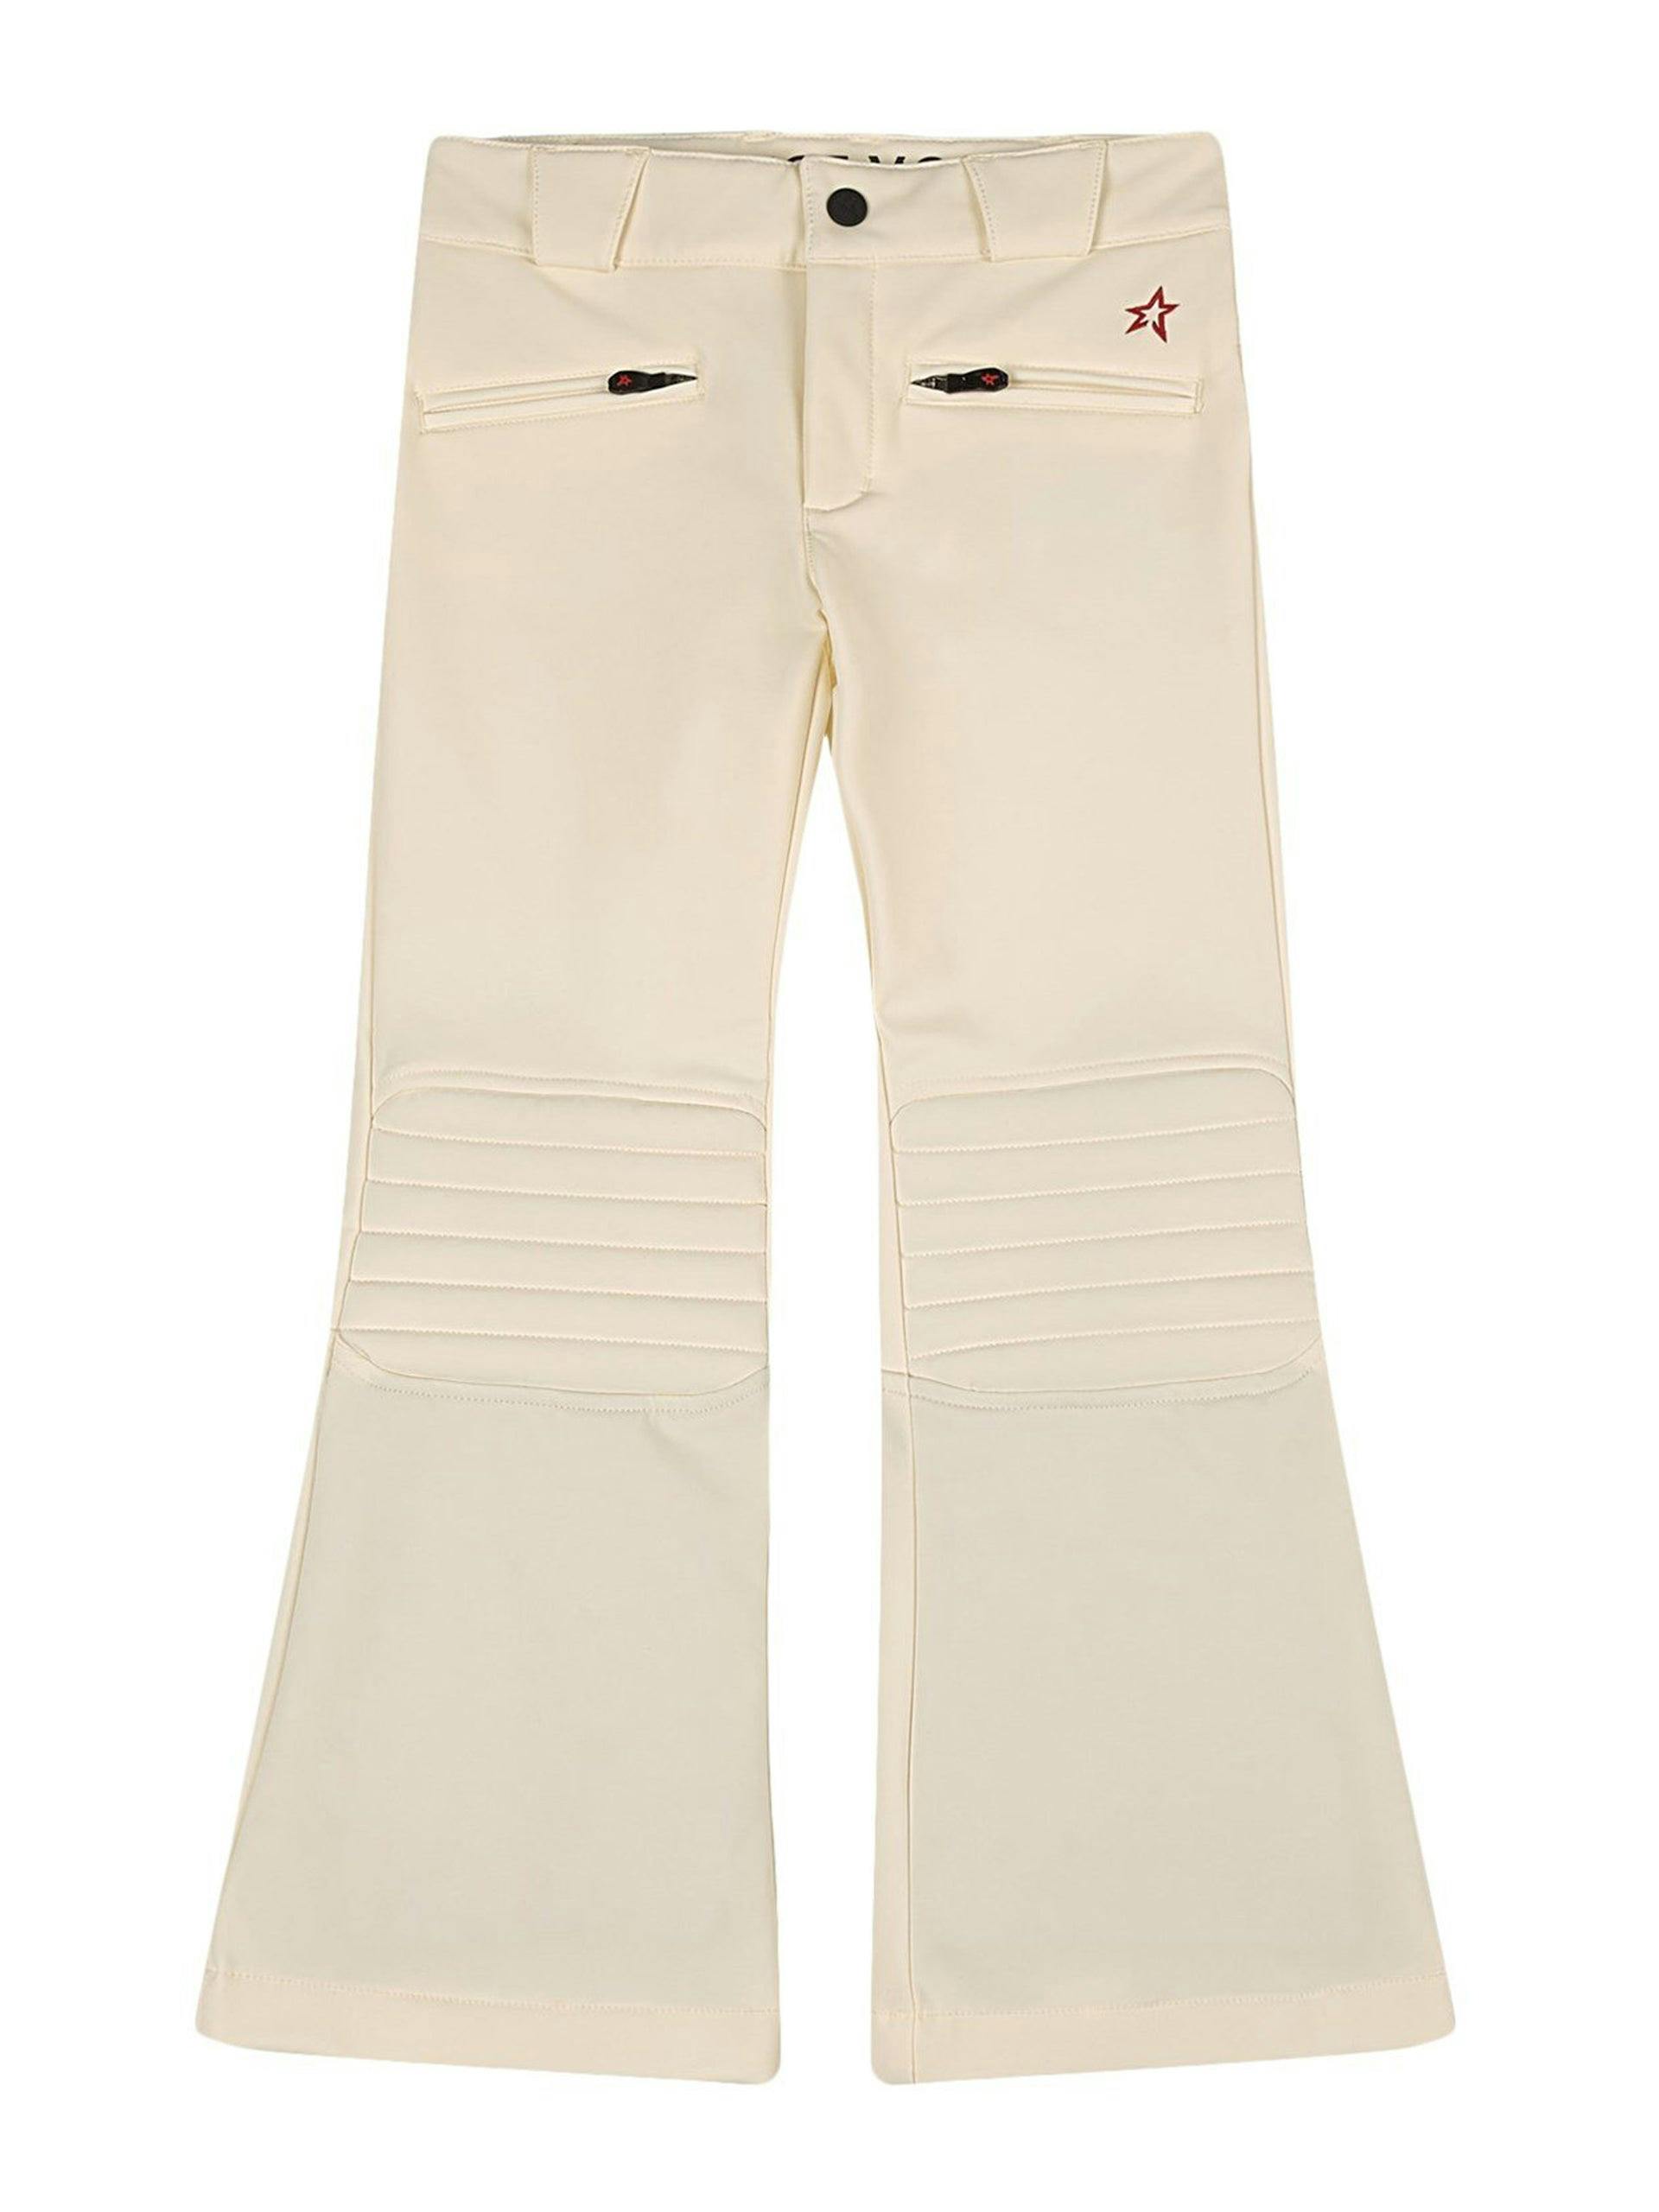 Cream ski trousers